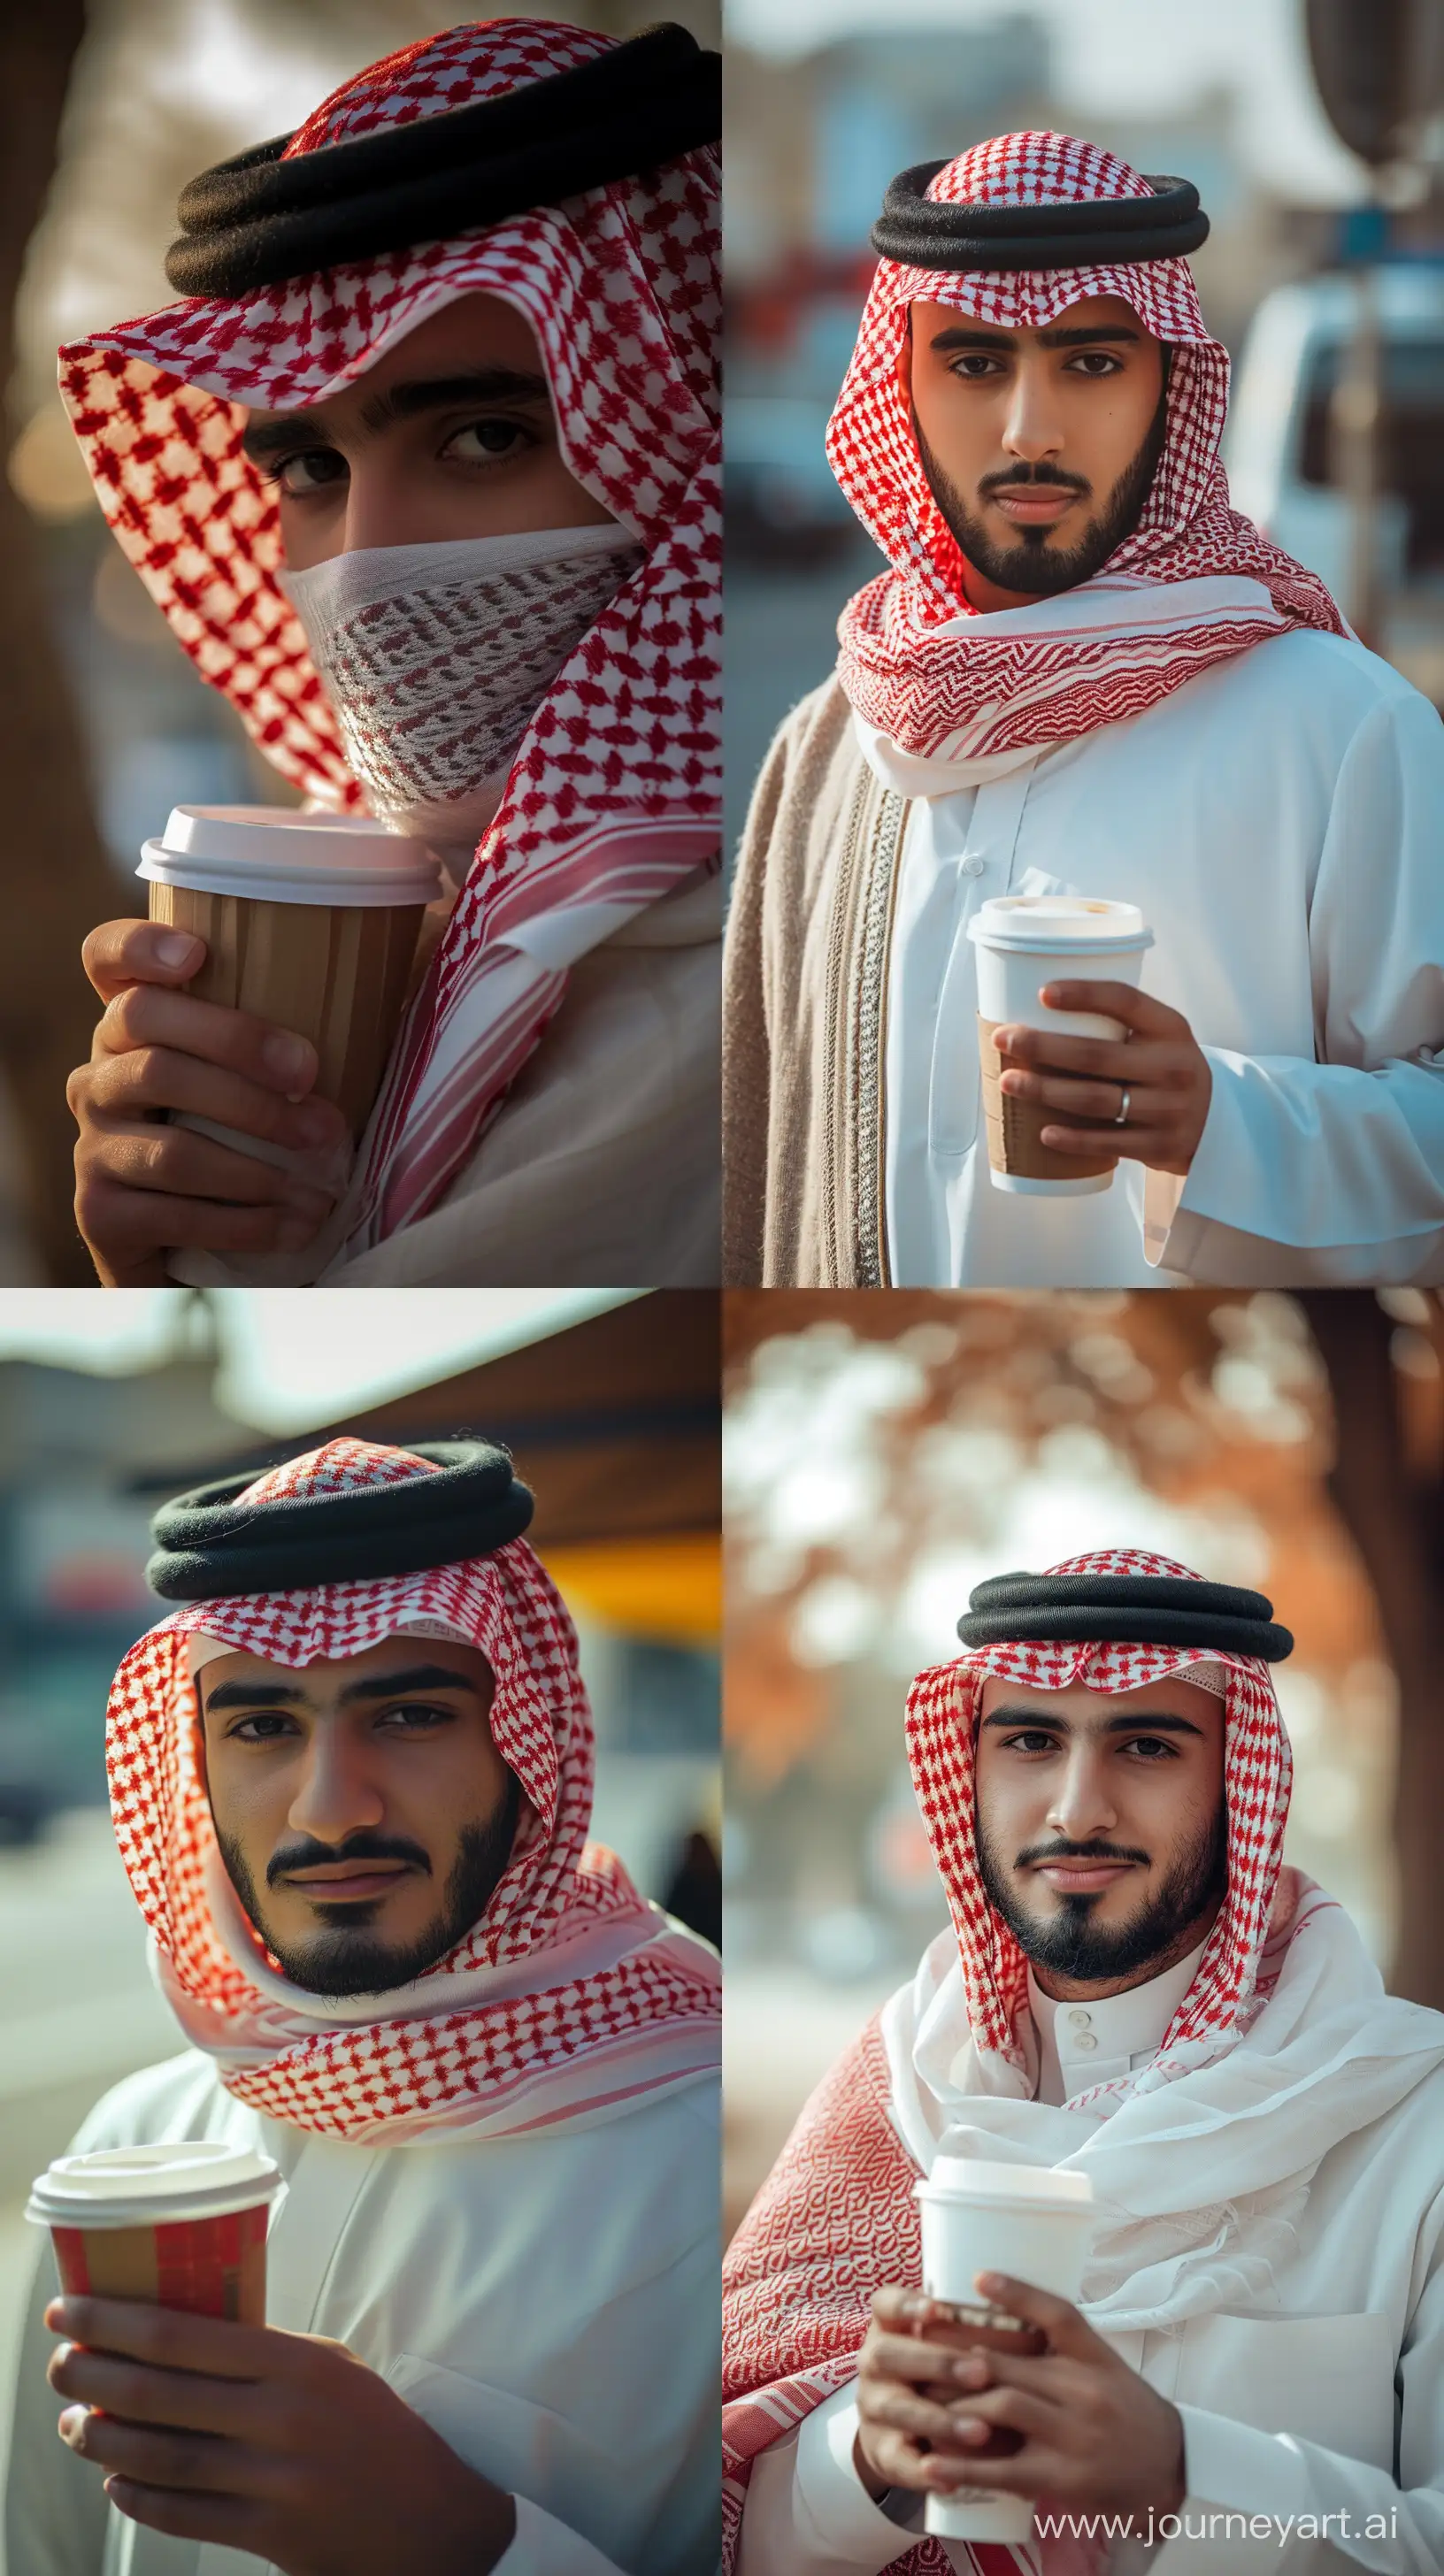 Cinematic-Saudi-Young-Man-Enjoying-Coffee-in-Imax-Style